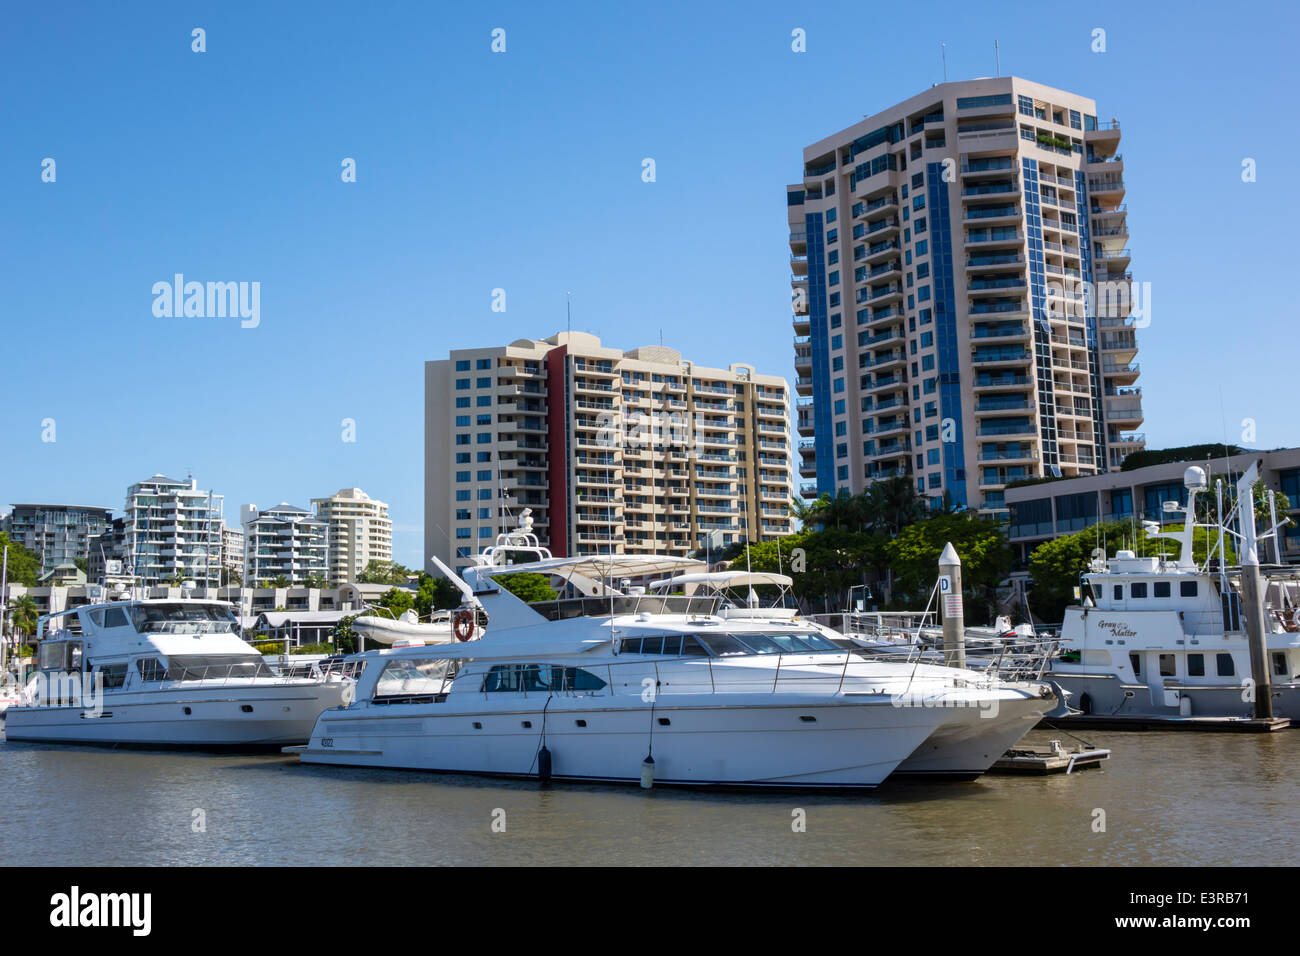 Brisbane Australia,Kangaroo Point,Brisbane River,Dockside,marina,condominium residential apartment apartments building buildings housing,boats,yachts, Stock Photo